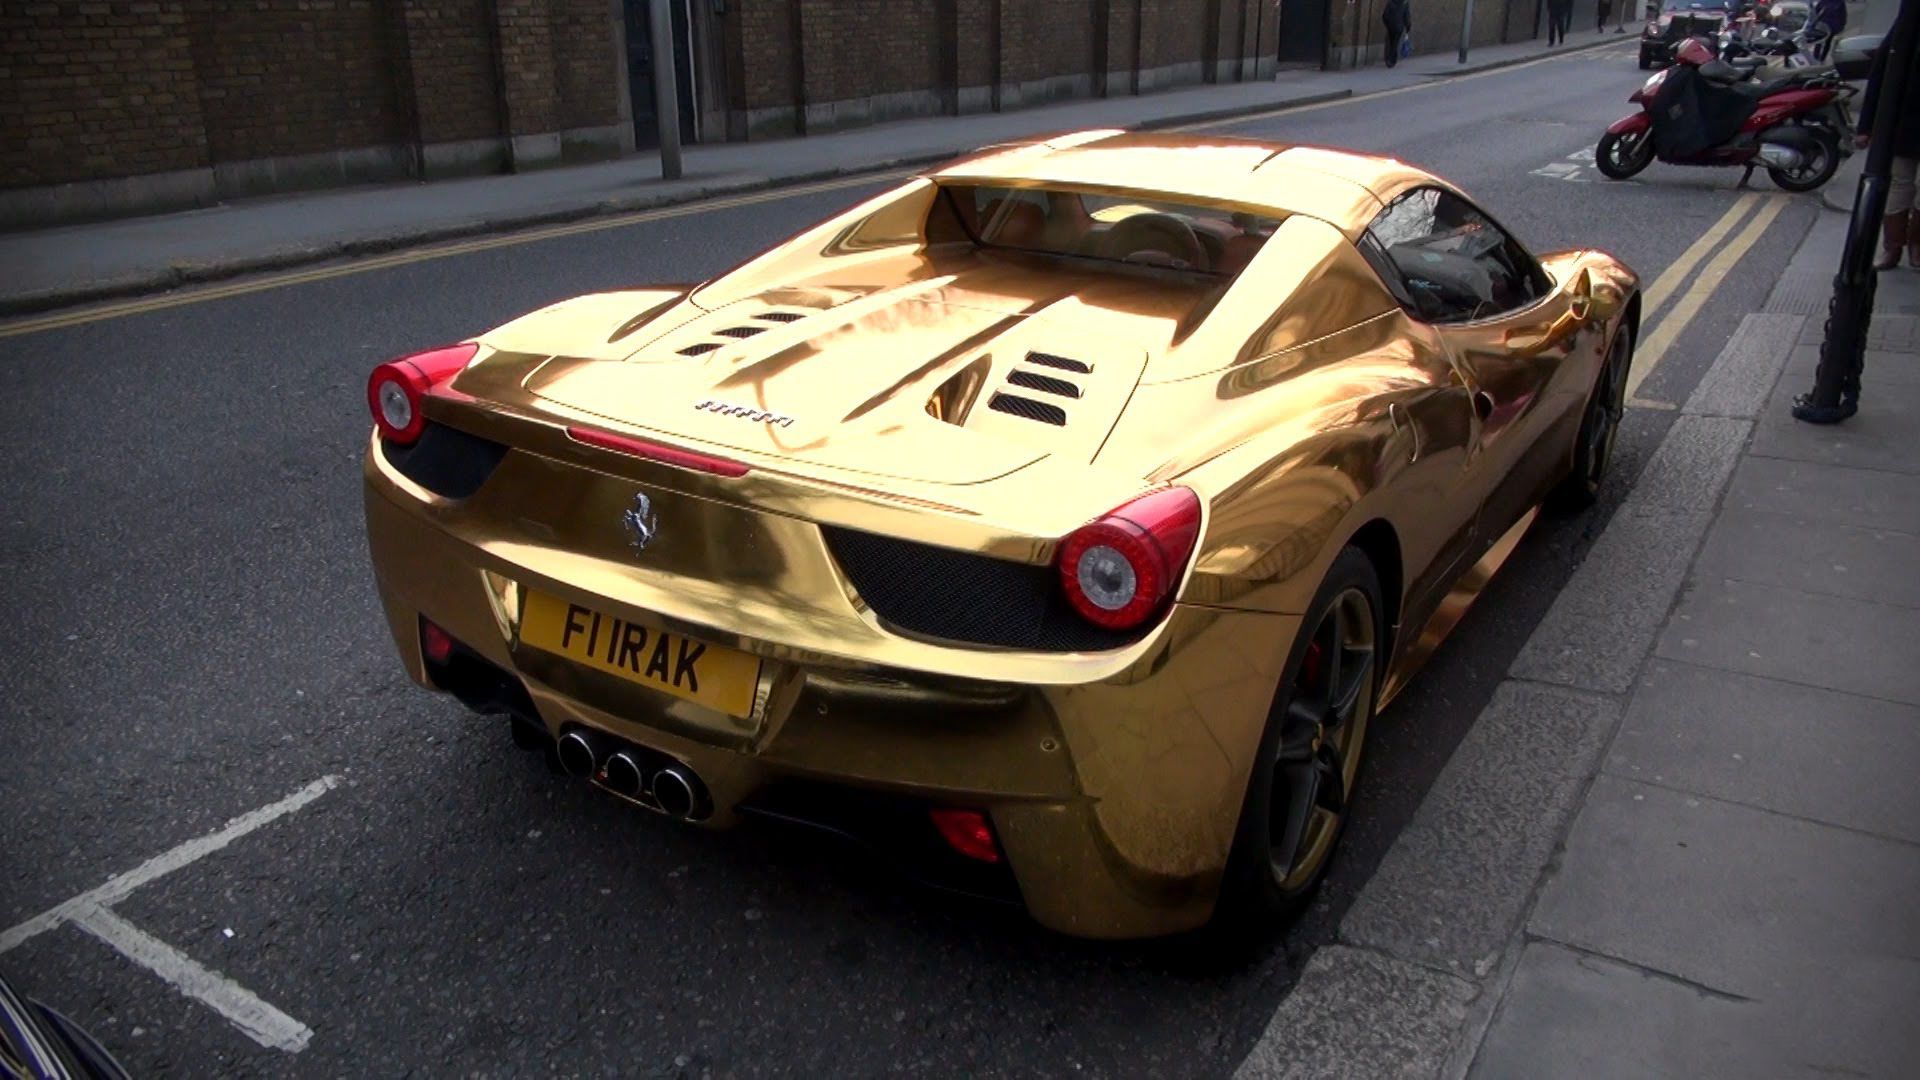 Gold Ferrari 458 Spider in a parking